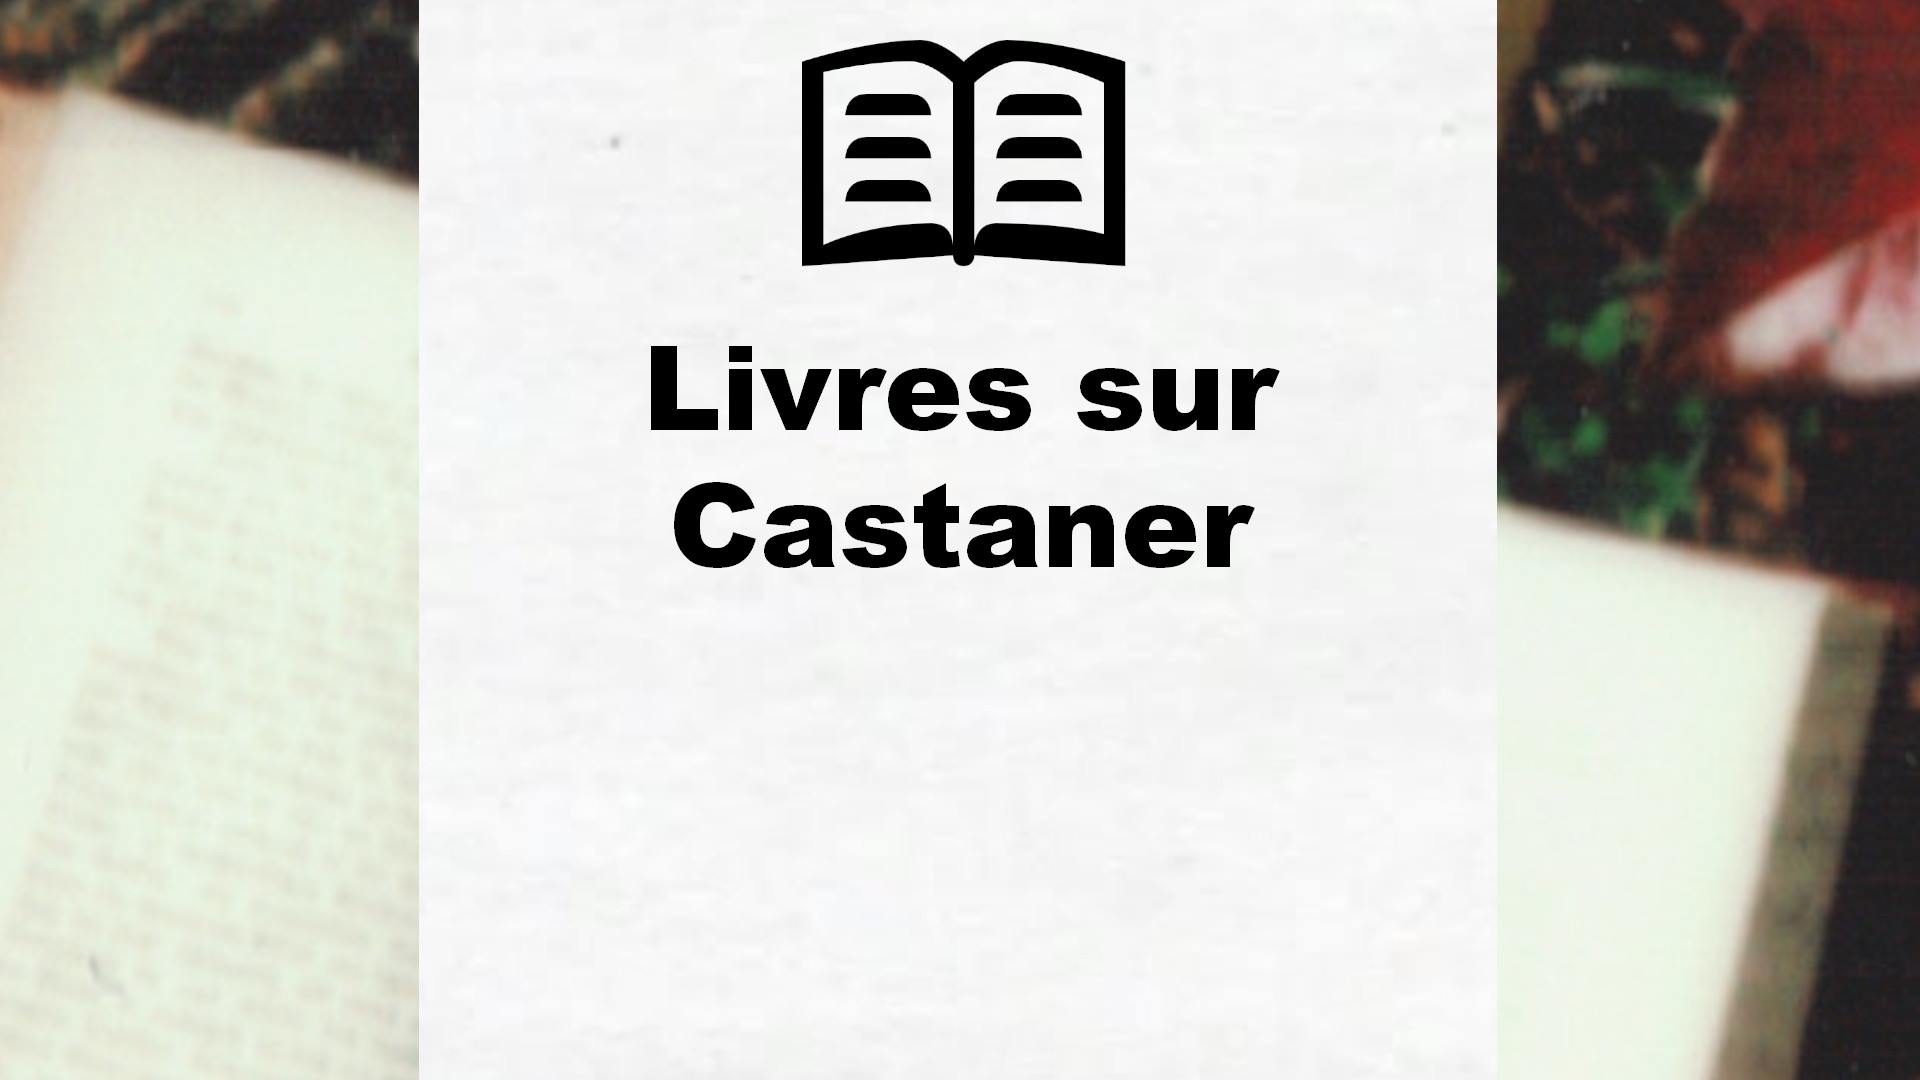 Livres sur Castaner